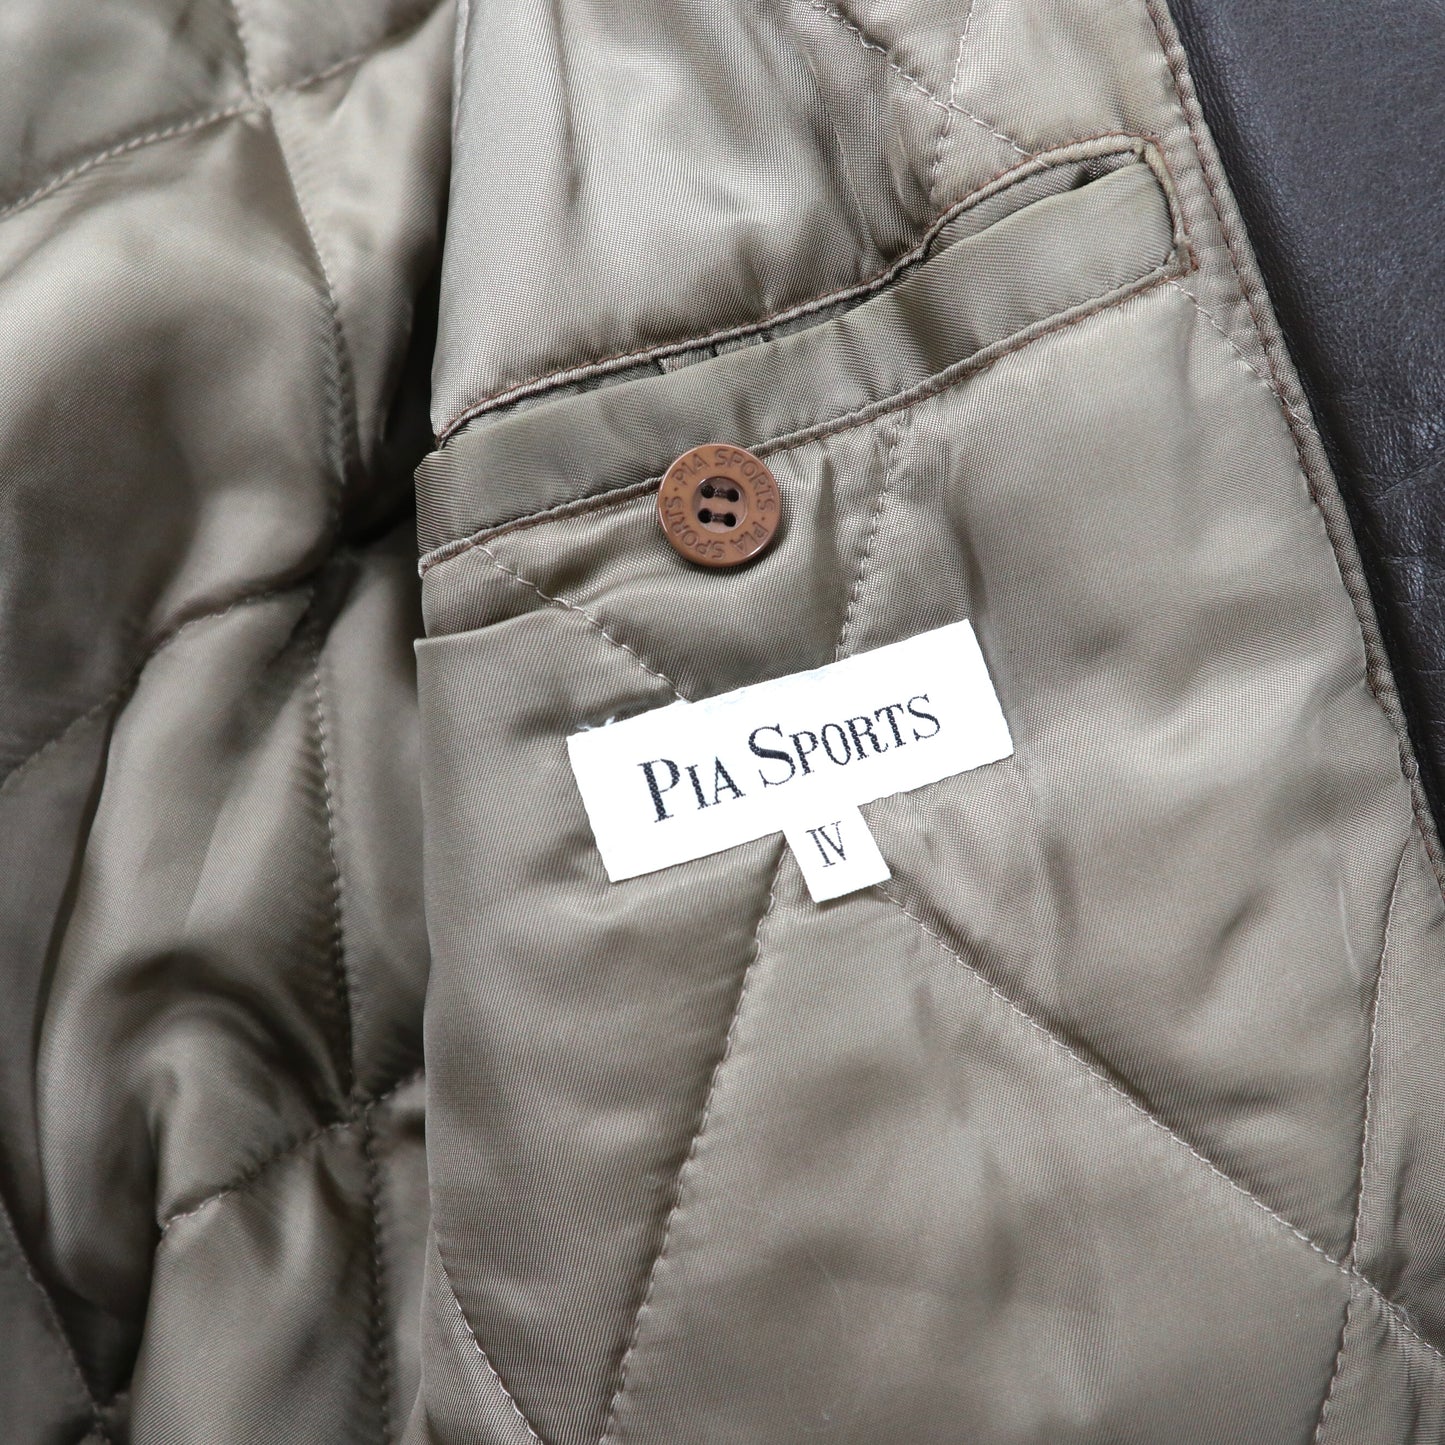 PIA SPORTS レザーボンバージャケット 4 ブラウン ラムレザー 羊革 ライカ 90年代 日本製